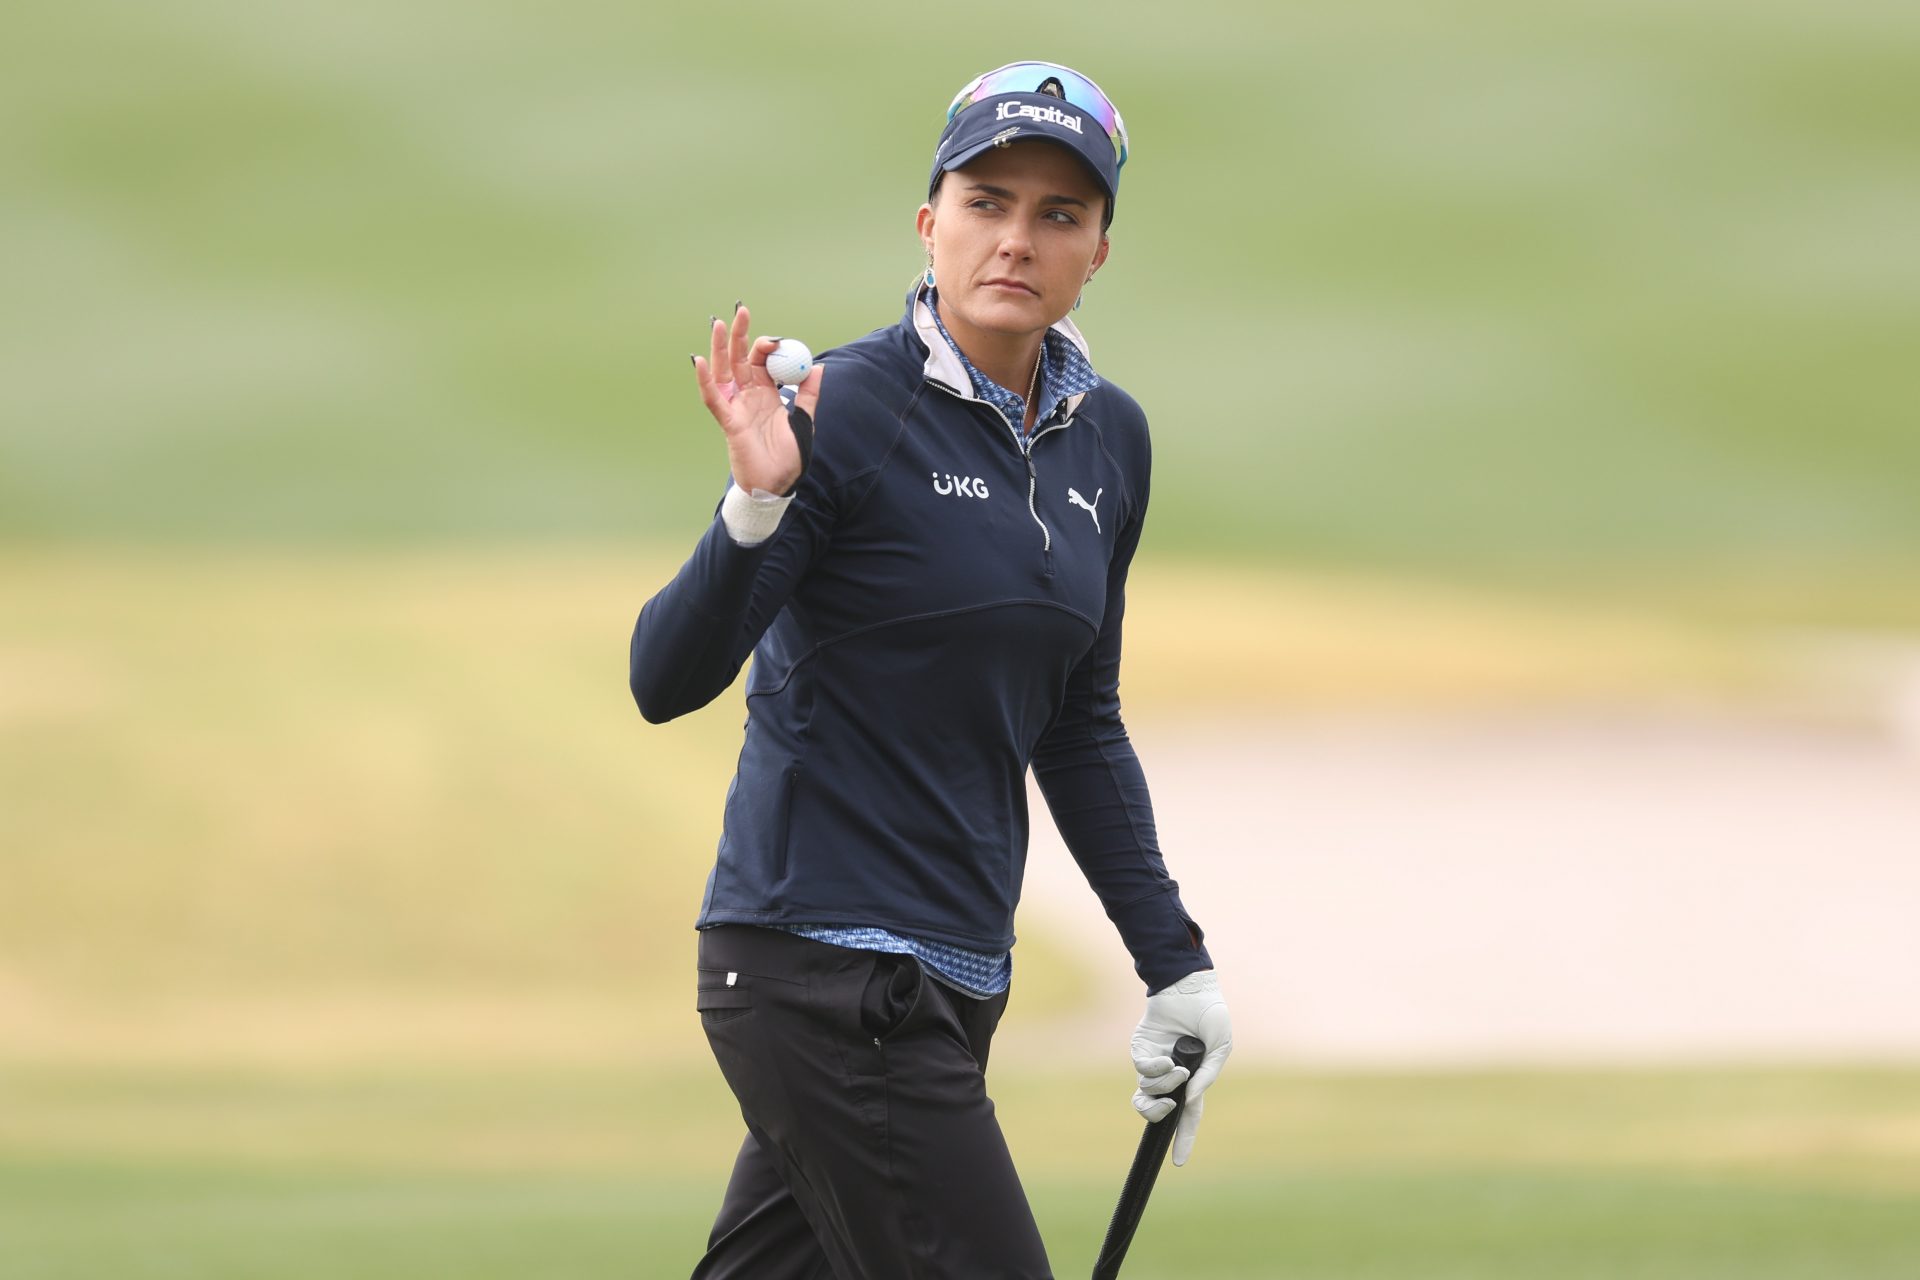 LPGA Tour pro Lexi Thompson makes shock announcement that she is quitting golf!